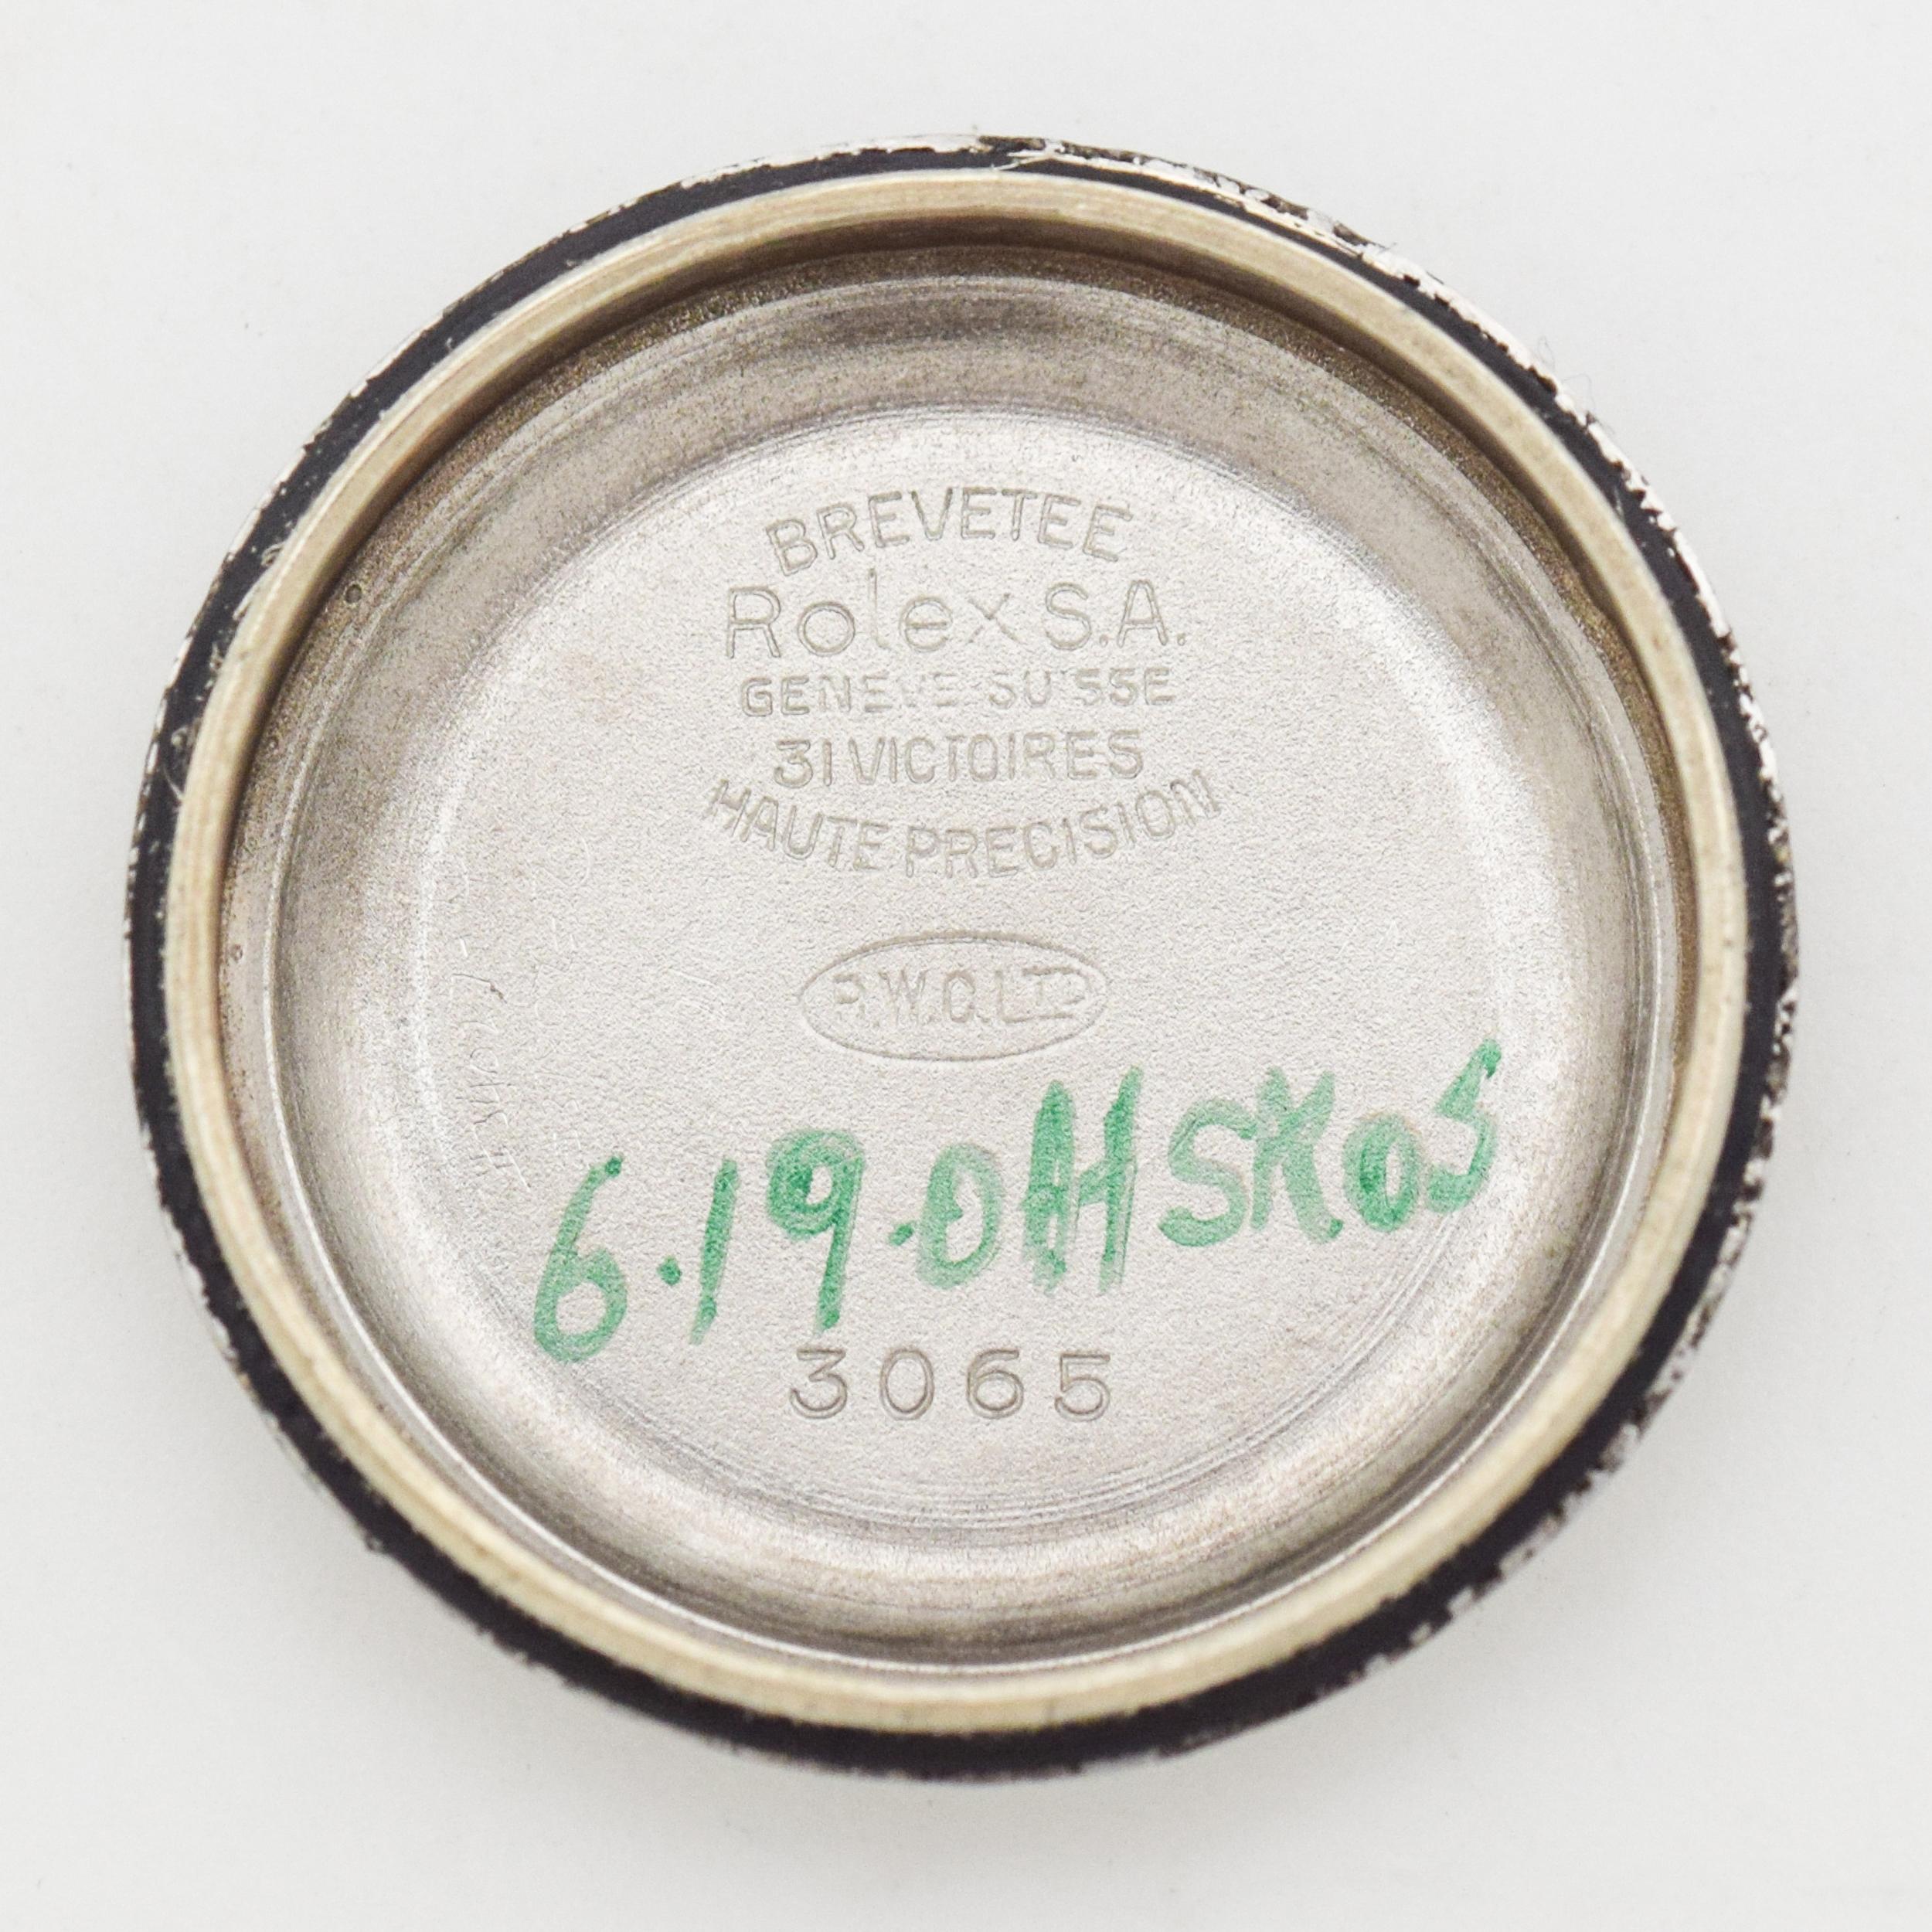 Vintage Rolex Bubbleback Reference 3065 Watch, 1945 3